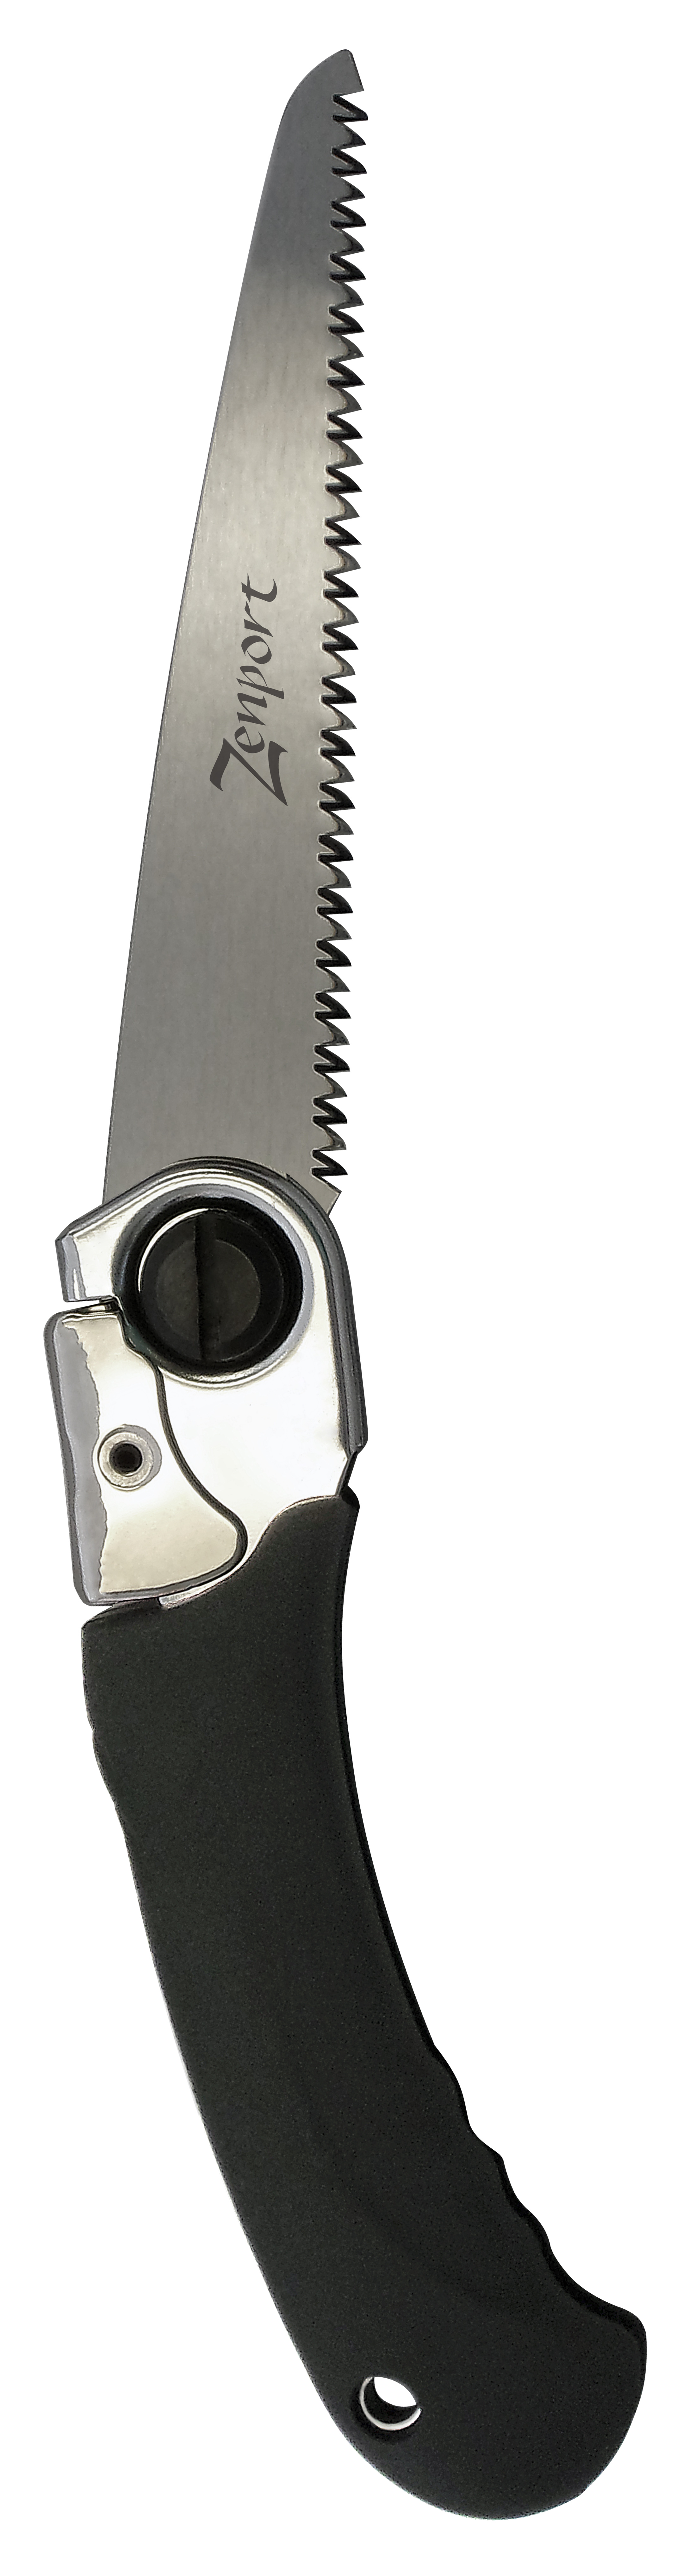 Zenport Saw SF130, 5-inch folding saw, pocket boy, pruning saw, tri-edge, sk5 japanese steel, metal handle